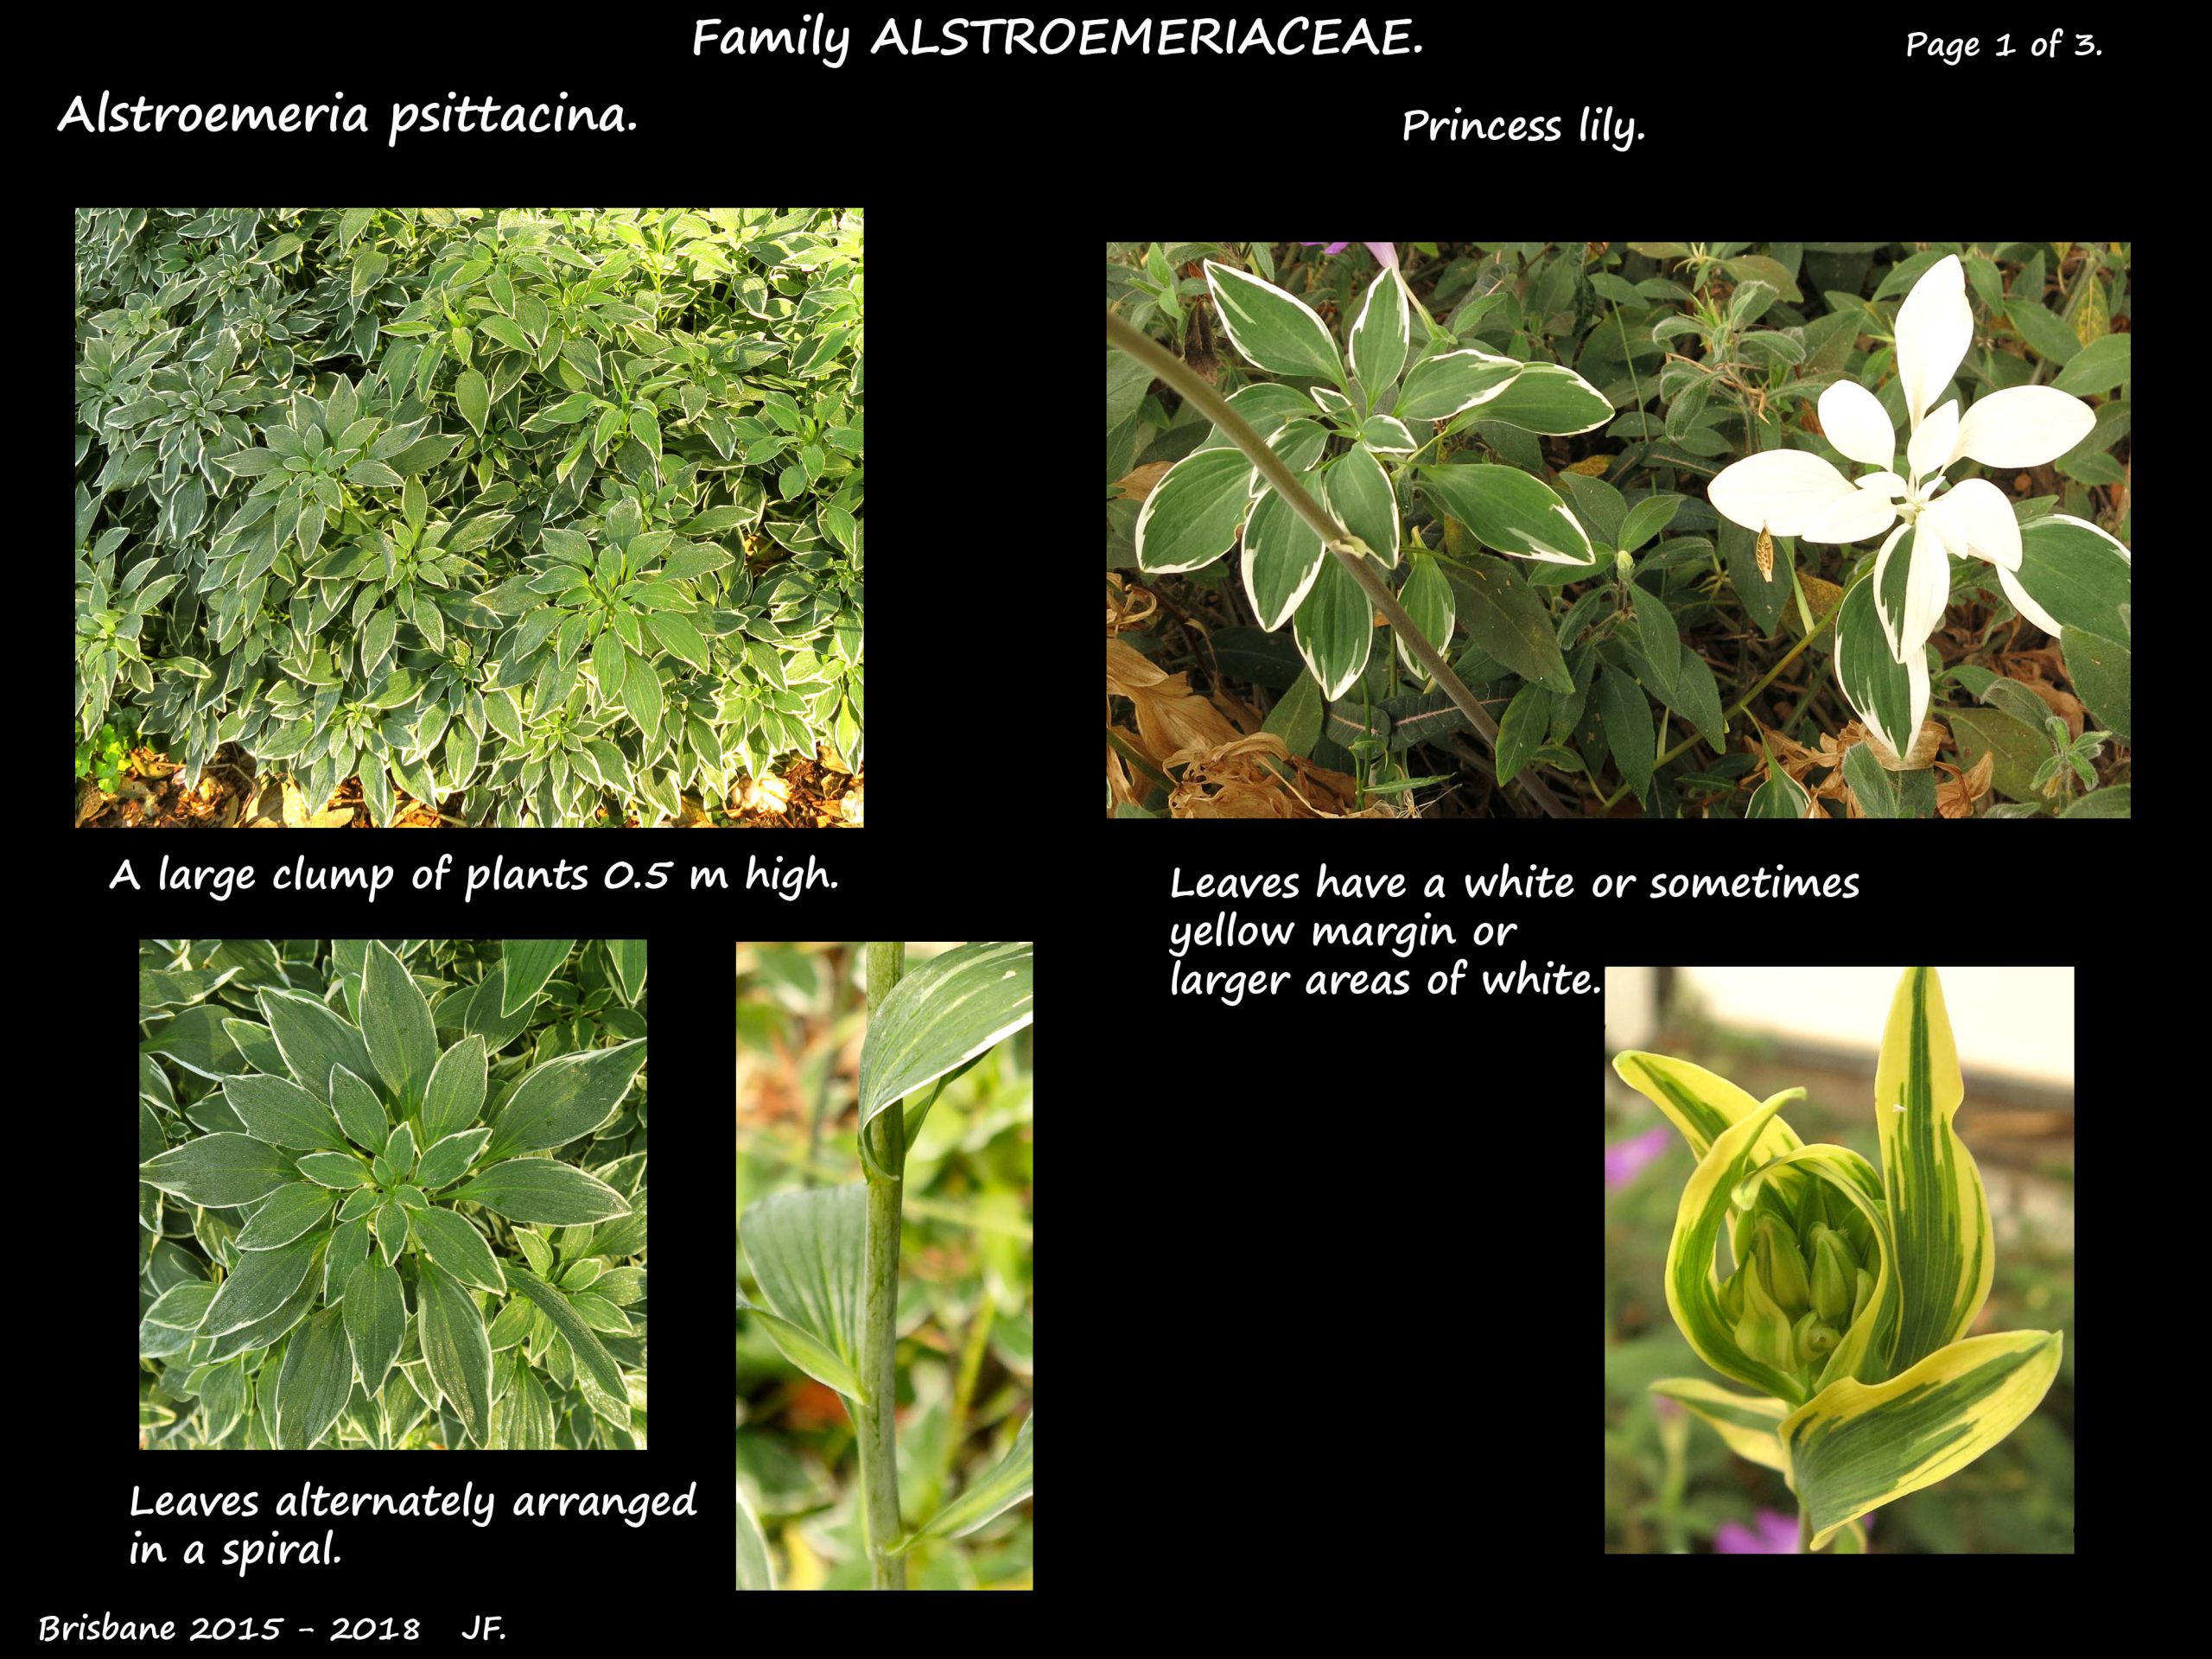 1 Alstroemeria psittacina leaves